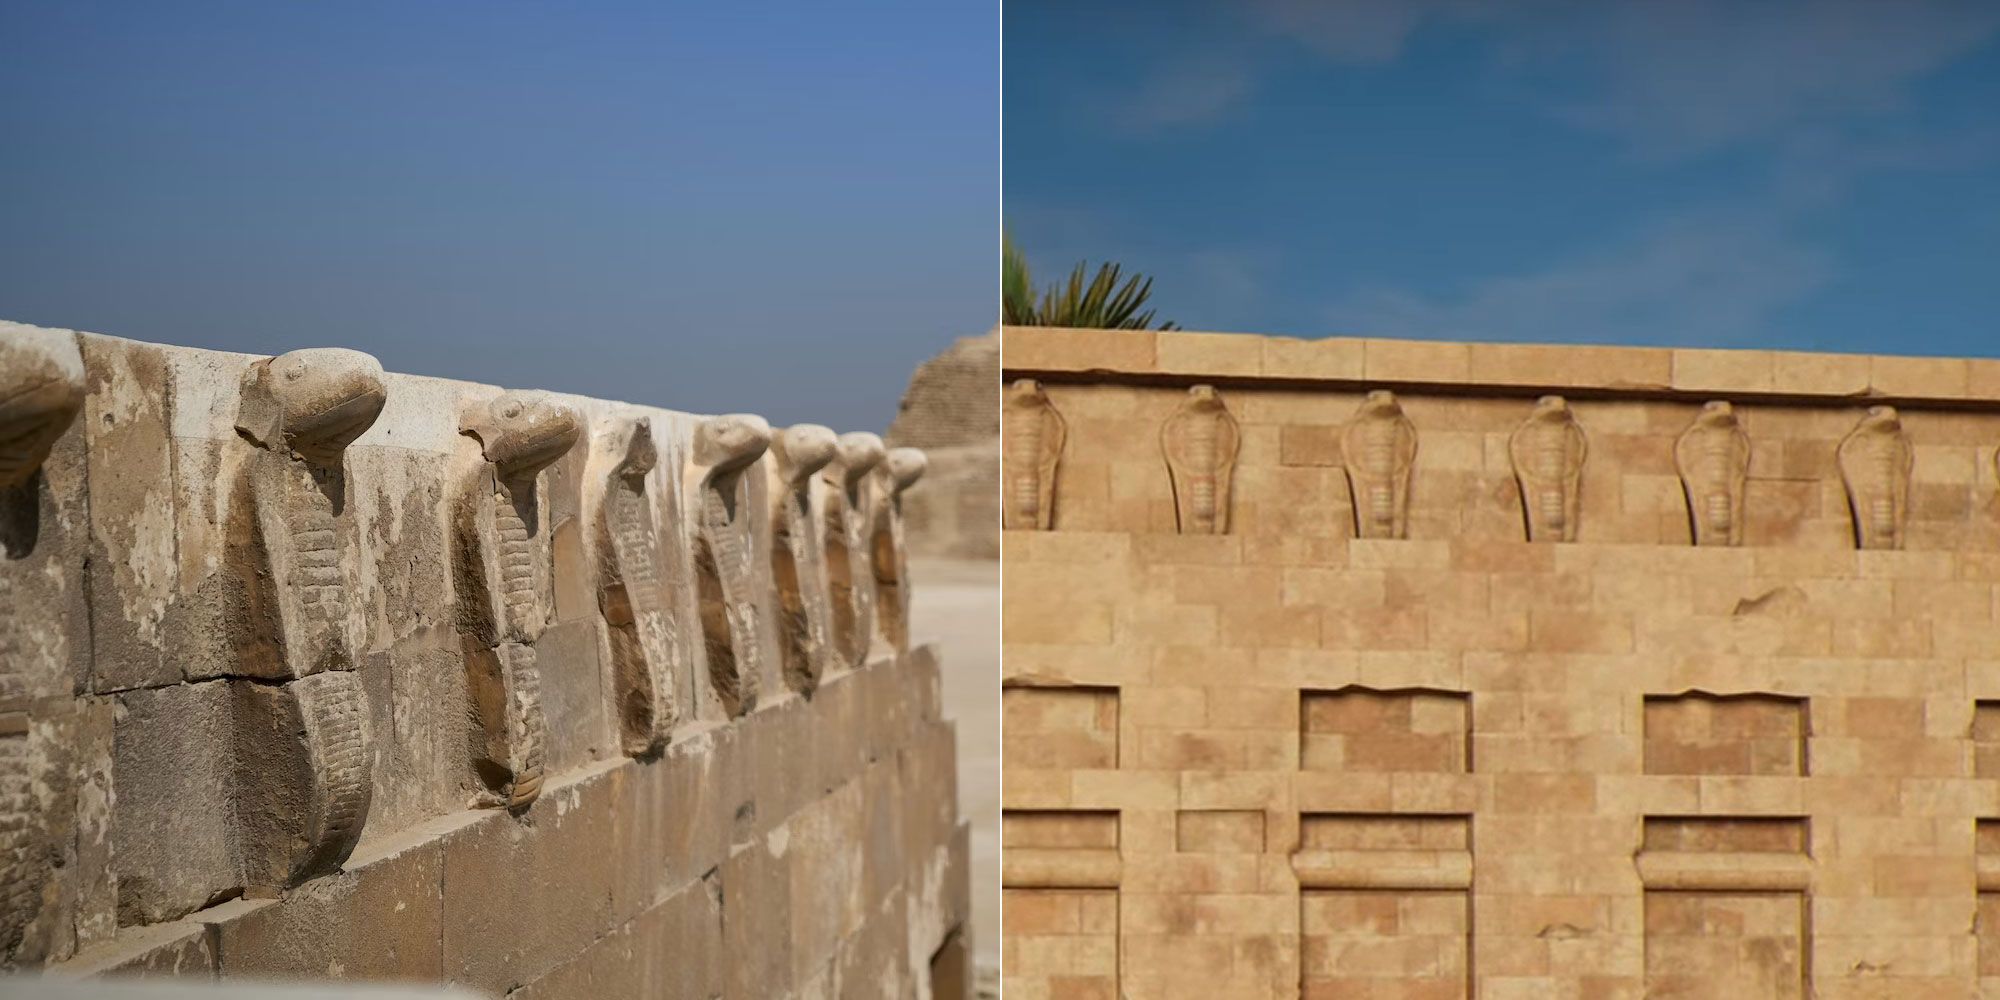 Kobrafries an der Pyramide des Djoser in Assassin's Creed 2.